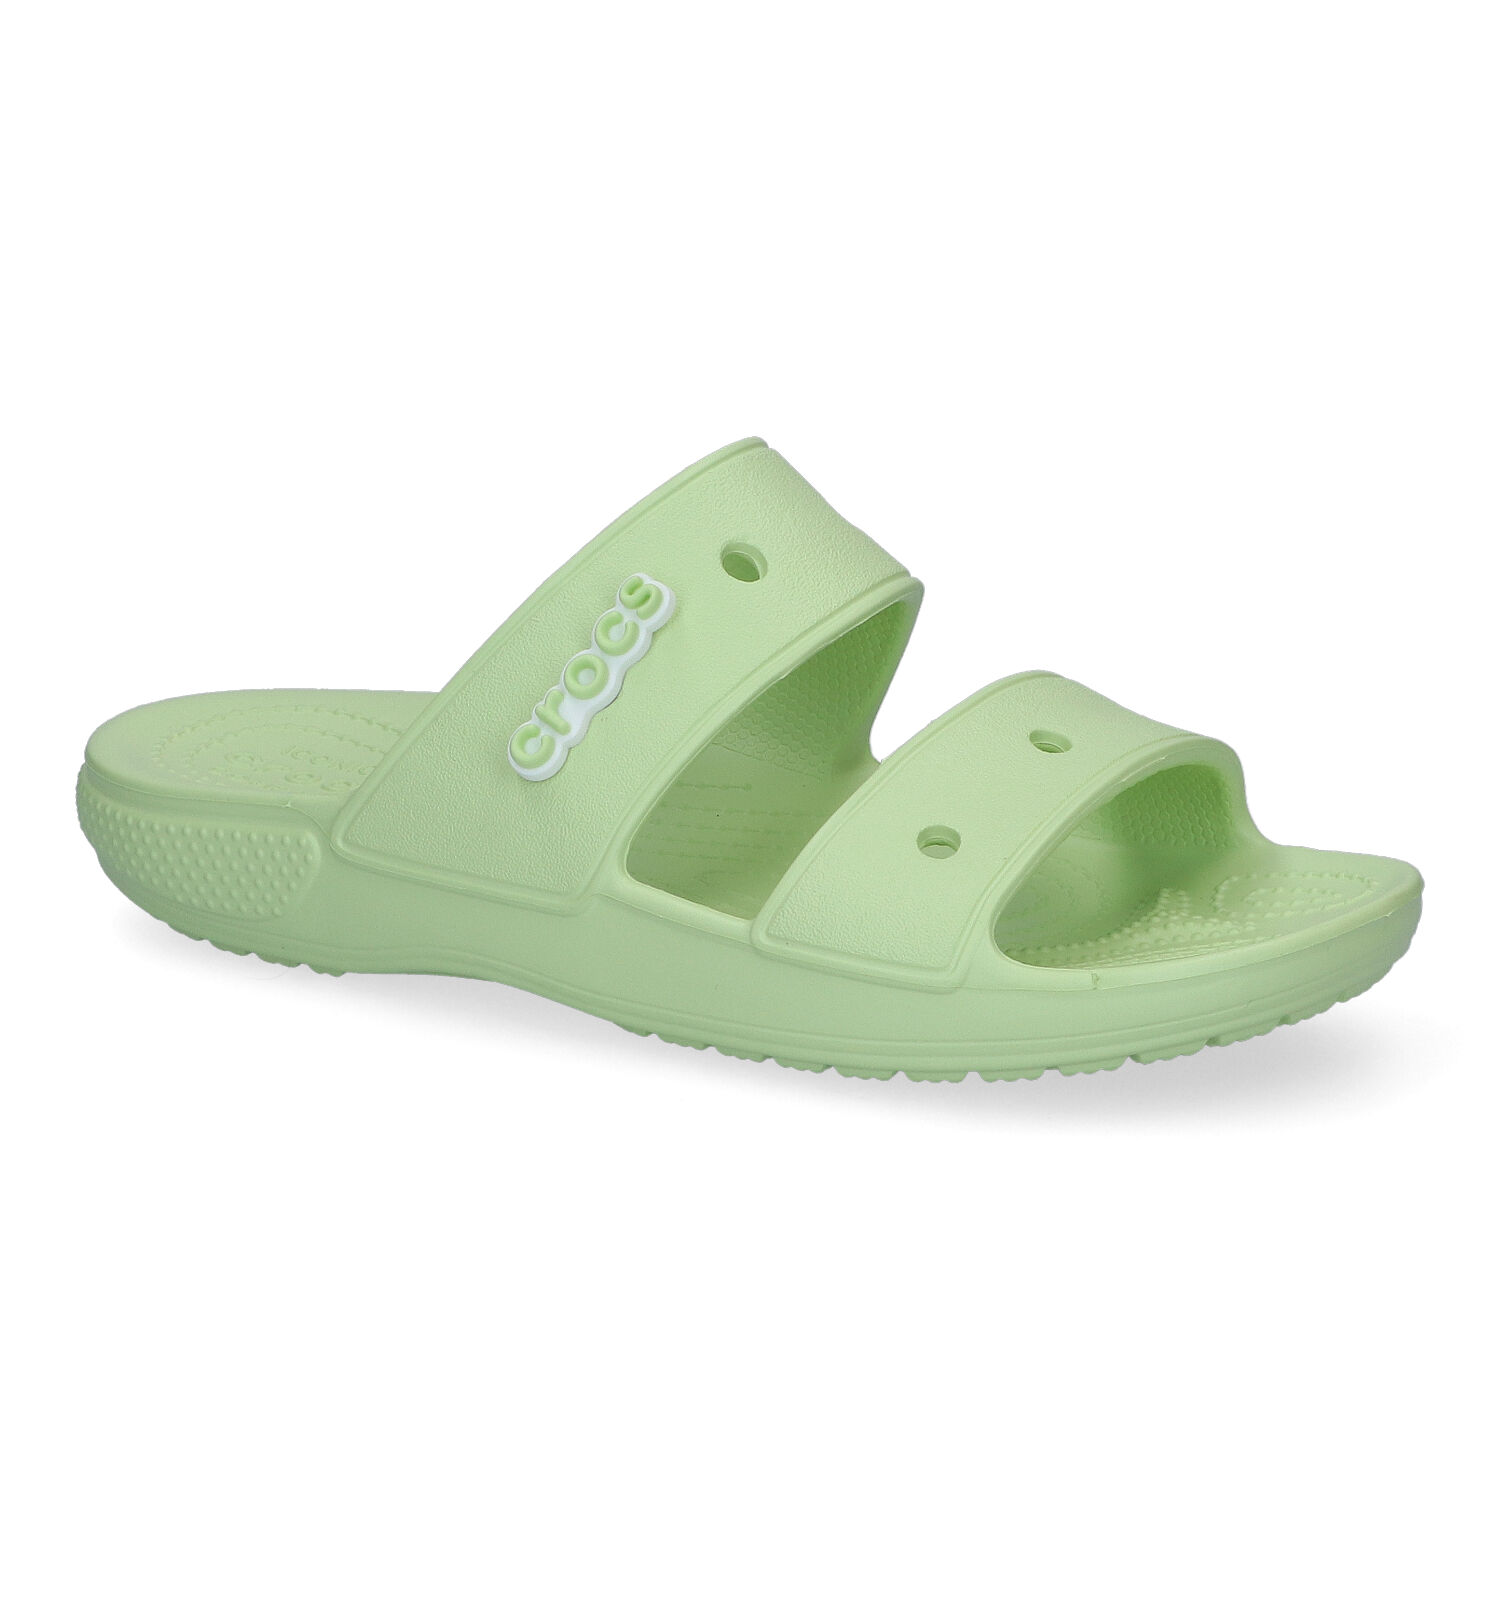 Crocs Classic Sandal Groene Slippers | Dames Slippers